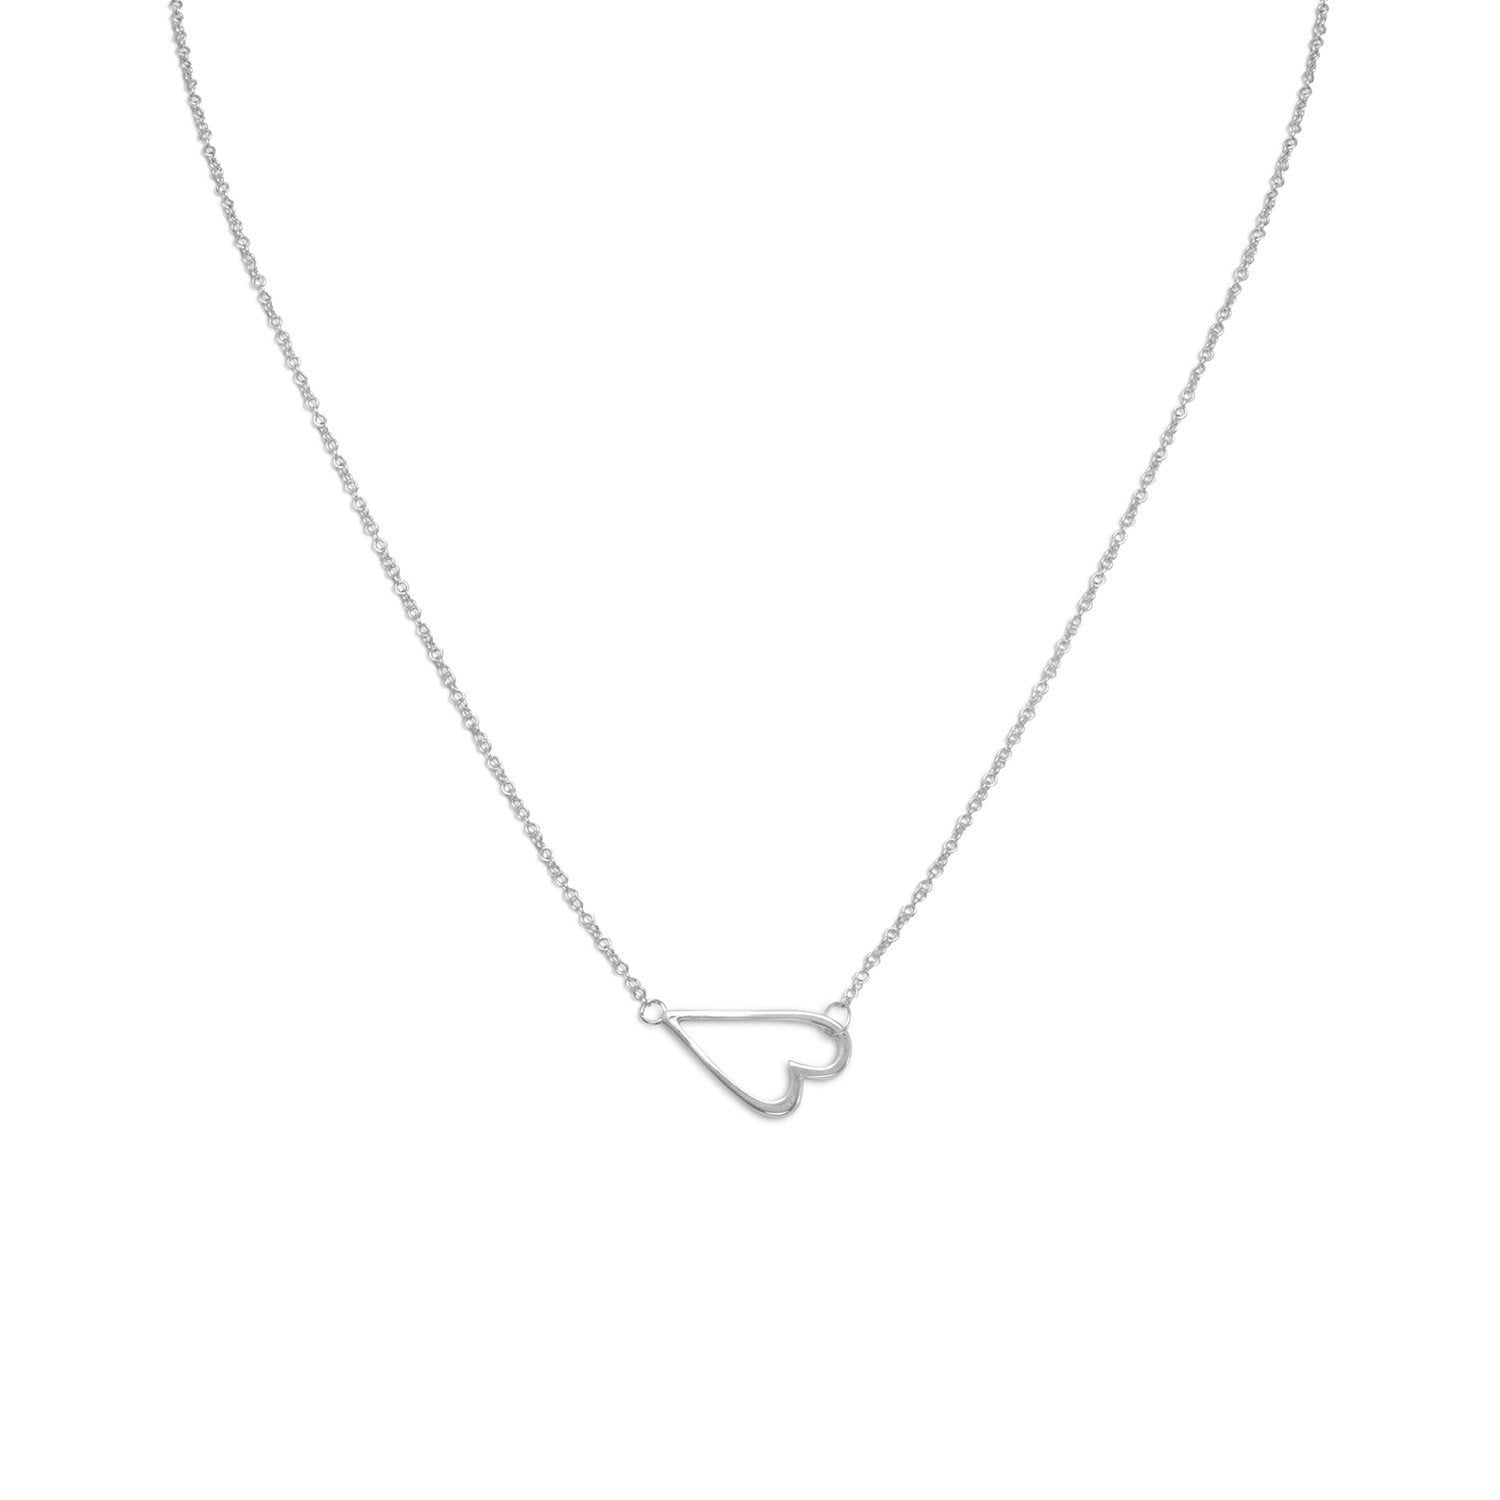 16" + 2" Rhodium Plated Sideways Heart Necklace - Joyeria Lady